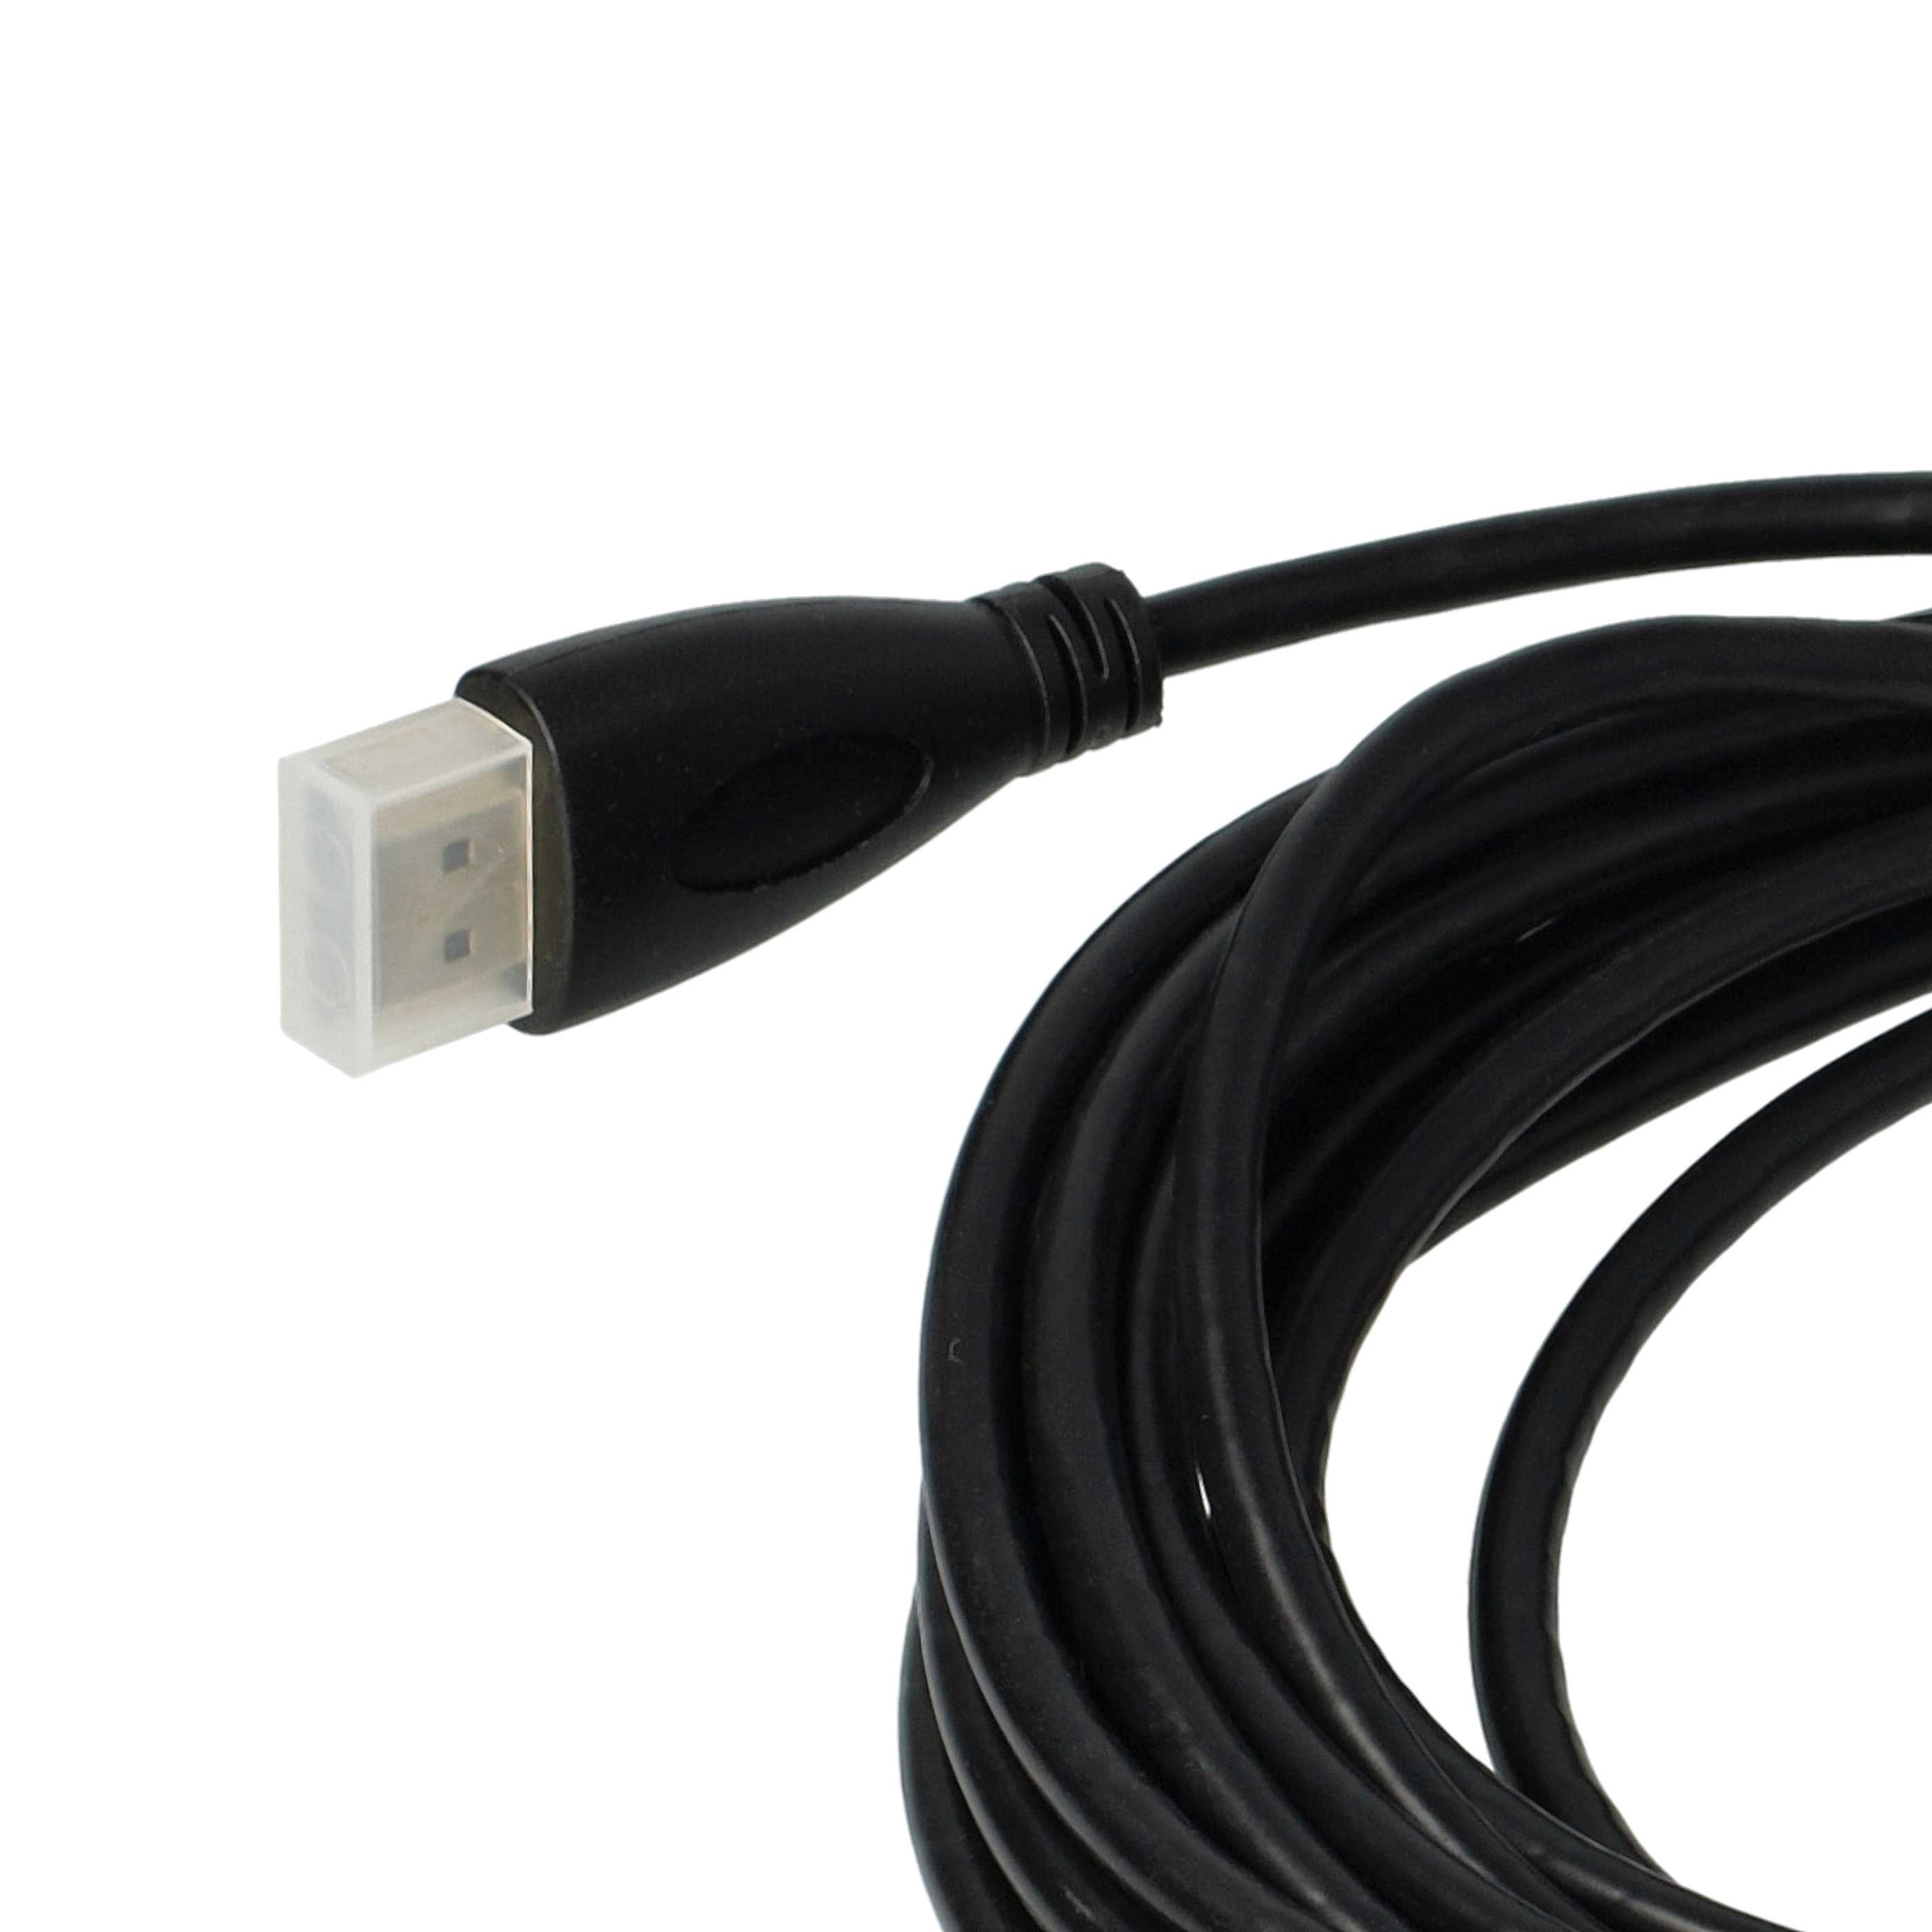 Câble HDMI, Micro-HDMI vers HDMI 1.4 5m pour Tablette, Smartphone, appareil photo